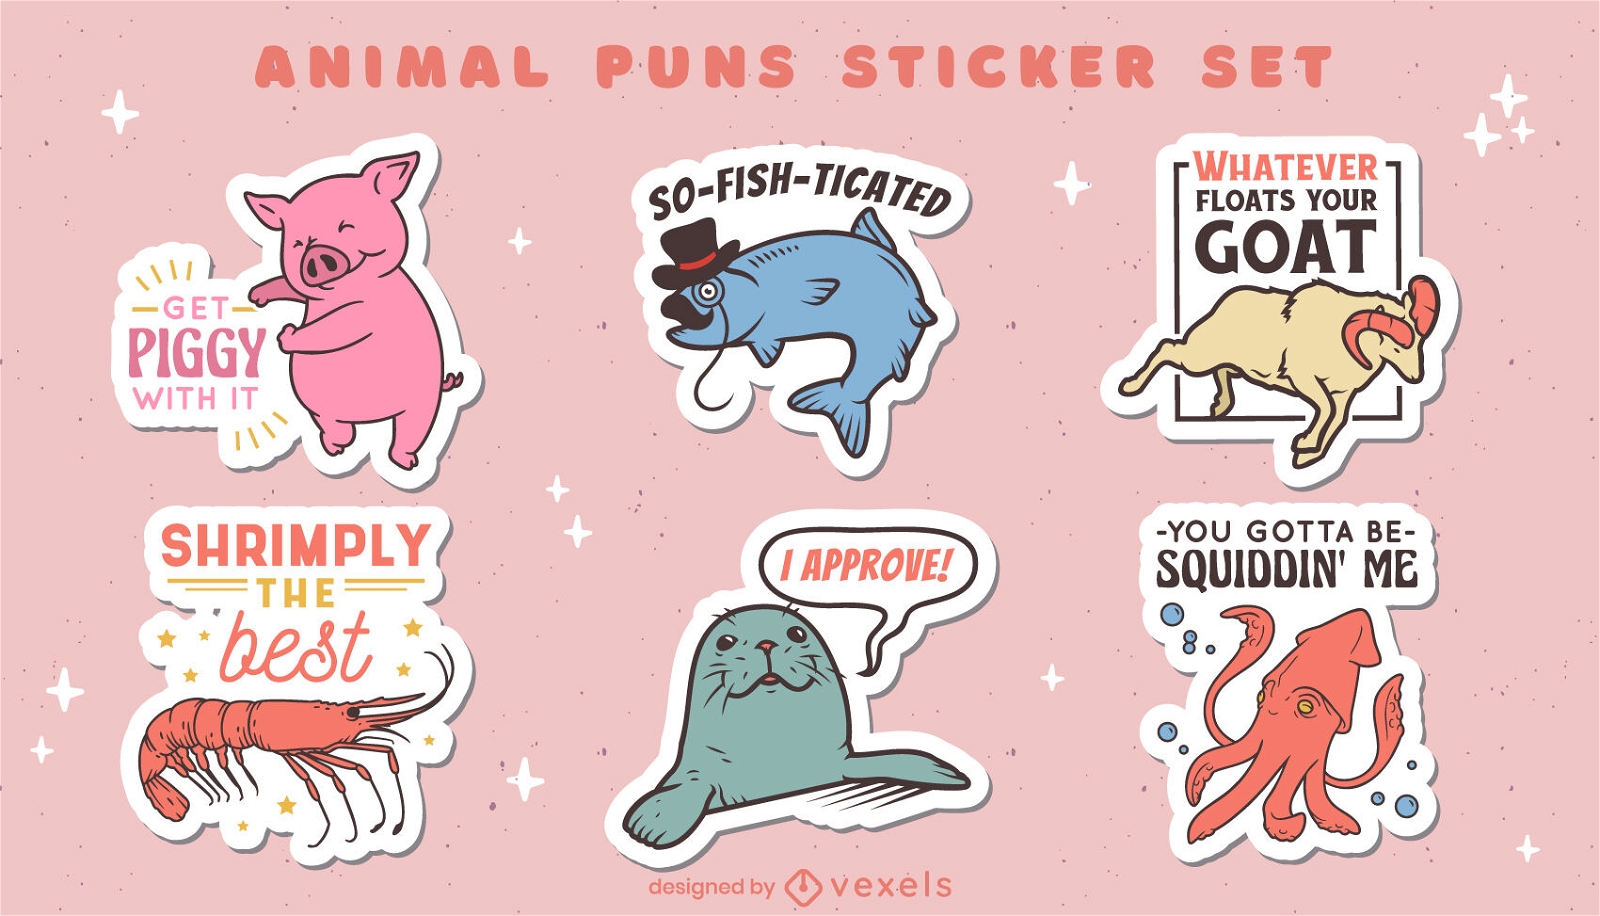 cute animal puns